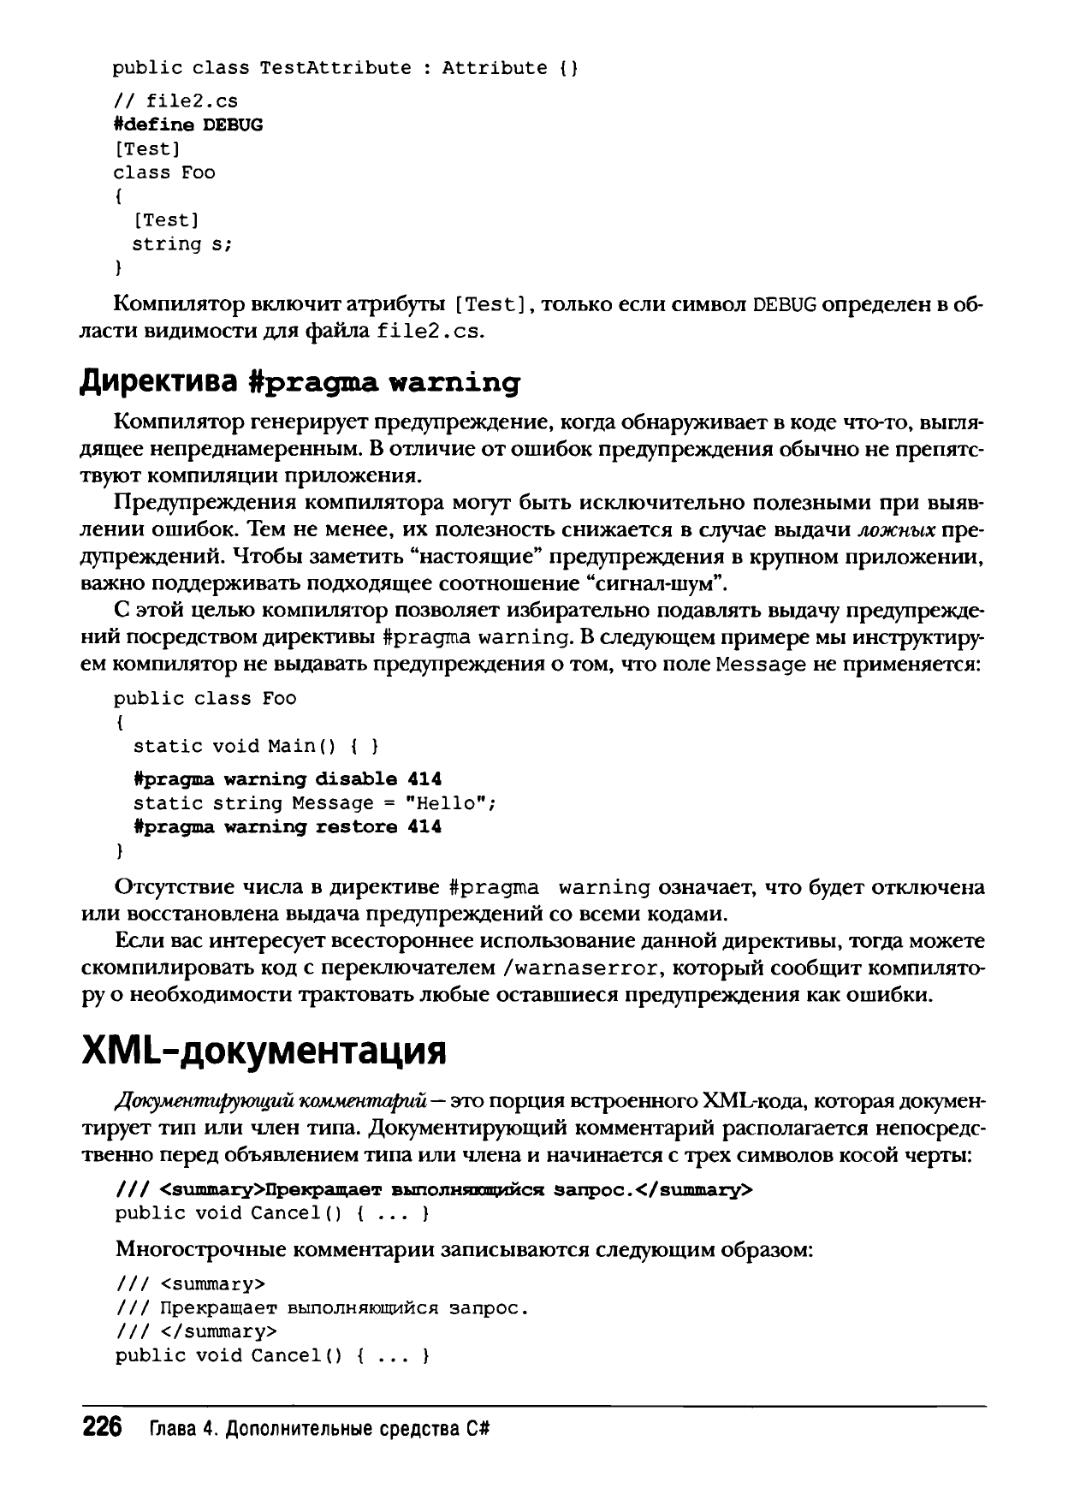 Директива ftpragma warning
XML-документация